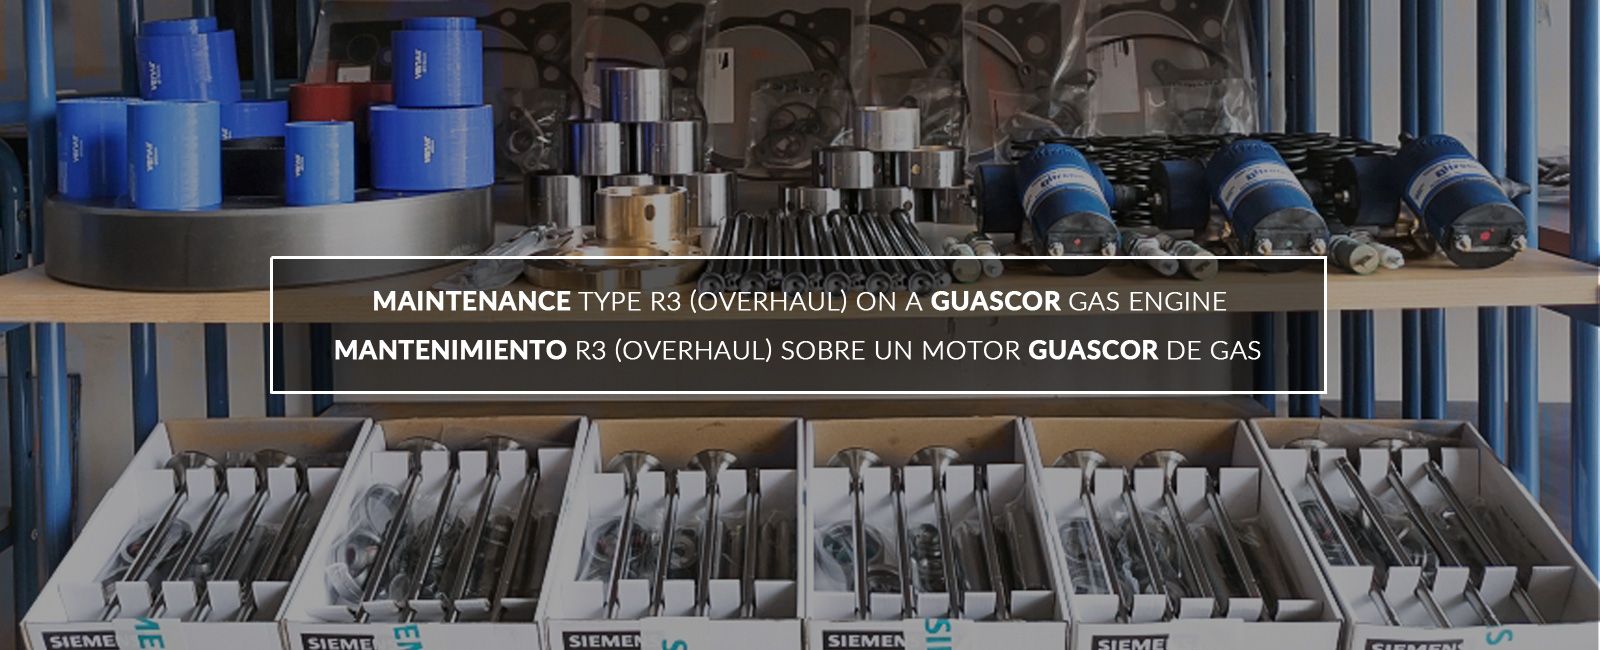 Mantenimiento-R3-Overhaul-sobre-un-motor-Guascor-de-gas-Maintenance-type-R3-Overhau)-on-a-Guascor-gas-engine